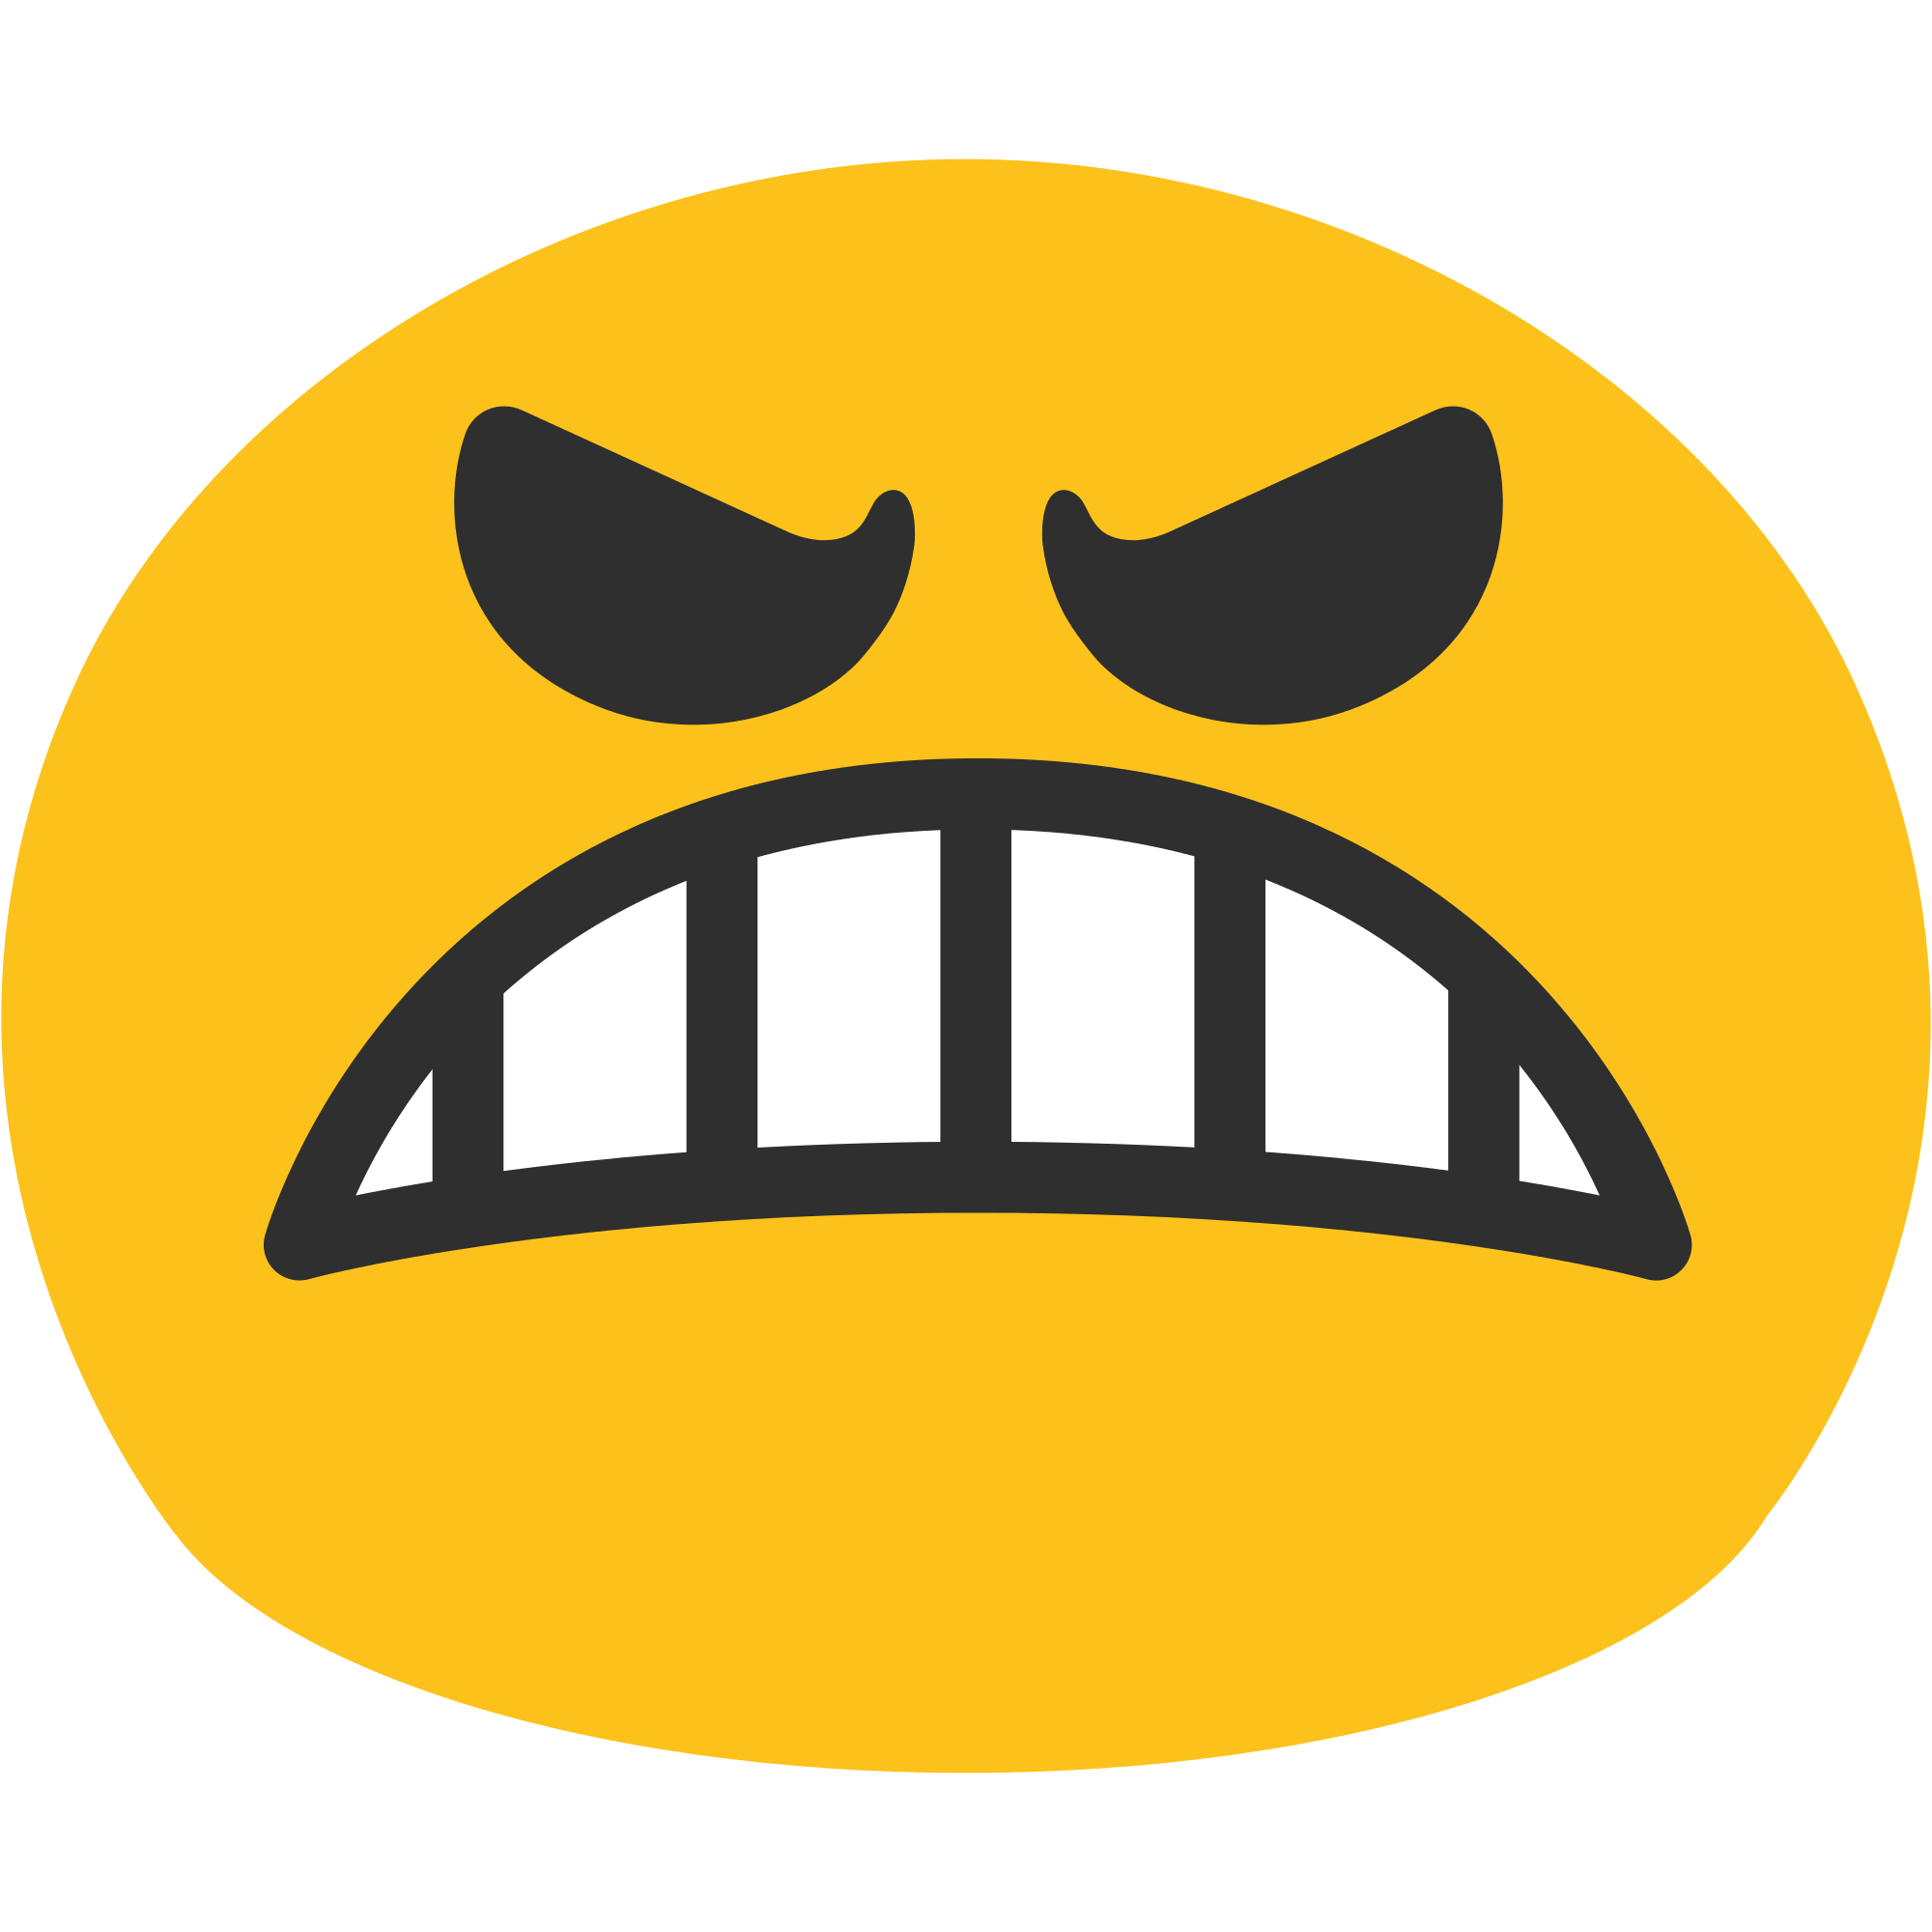 Download Angry Emoji Transparent Background HQ PNG Image FreePNGImg